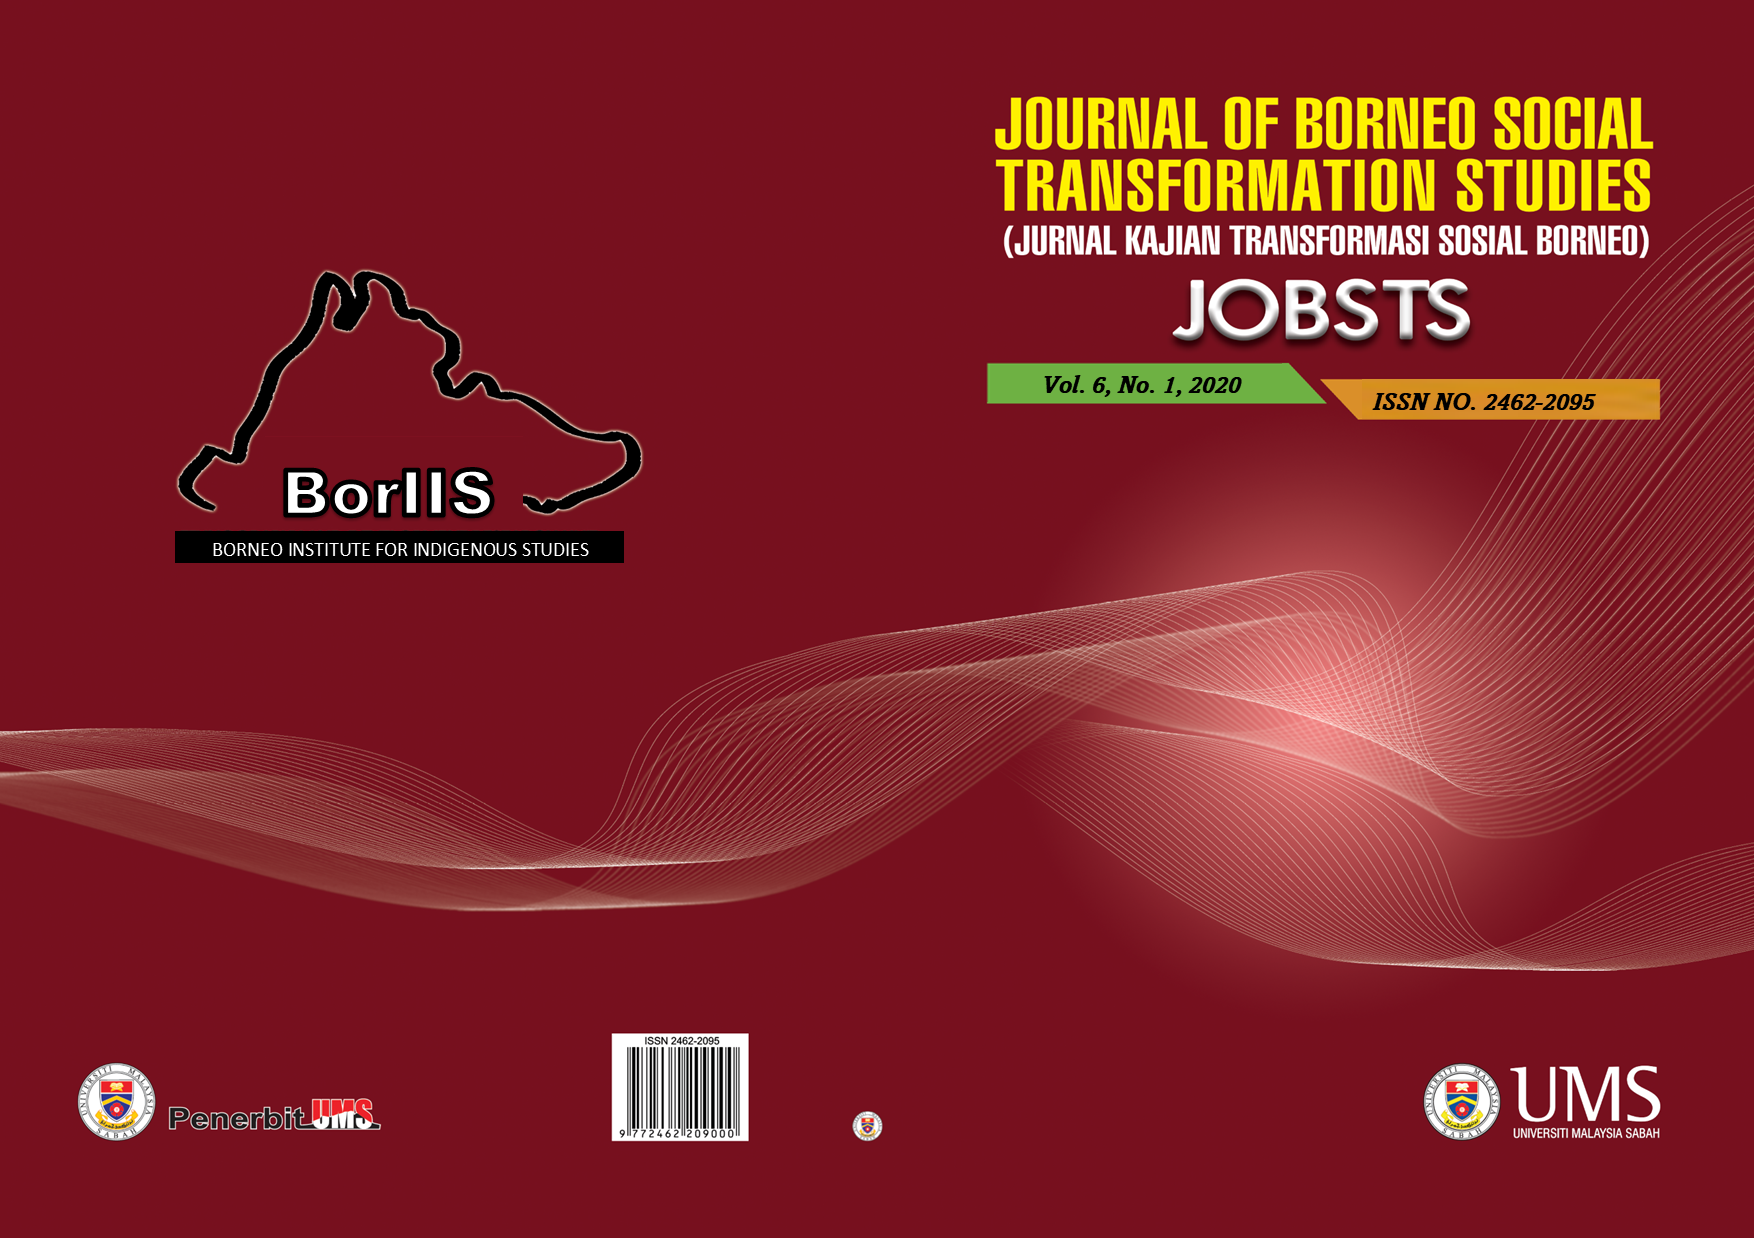 					View Vol. 6 No. 1 (2020): Journal of Borneo Social Transformation Studies (JOBSTS) Vol.6, No.1, 2020
				